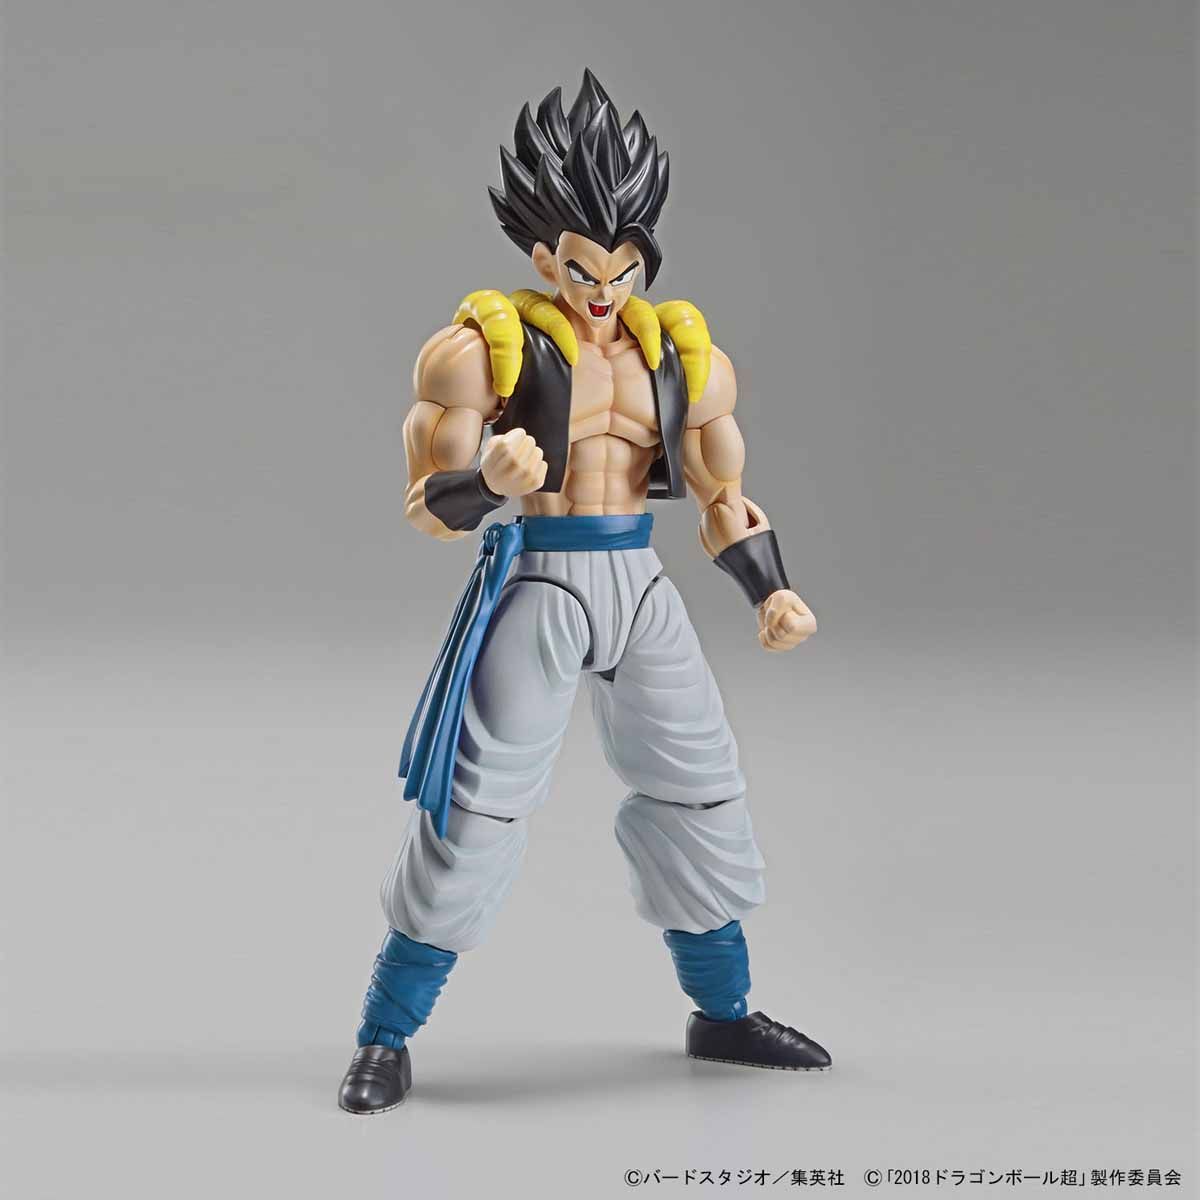 Dragon Ball Figure-rise Standard - Super Saiyan God Super Saiyan Gogeta